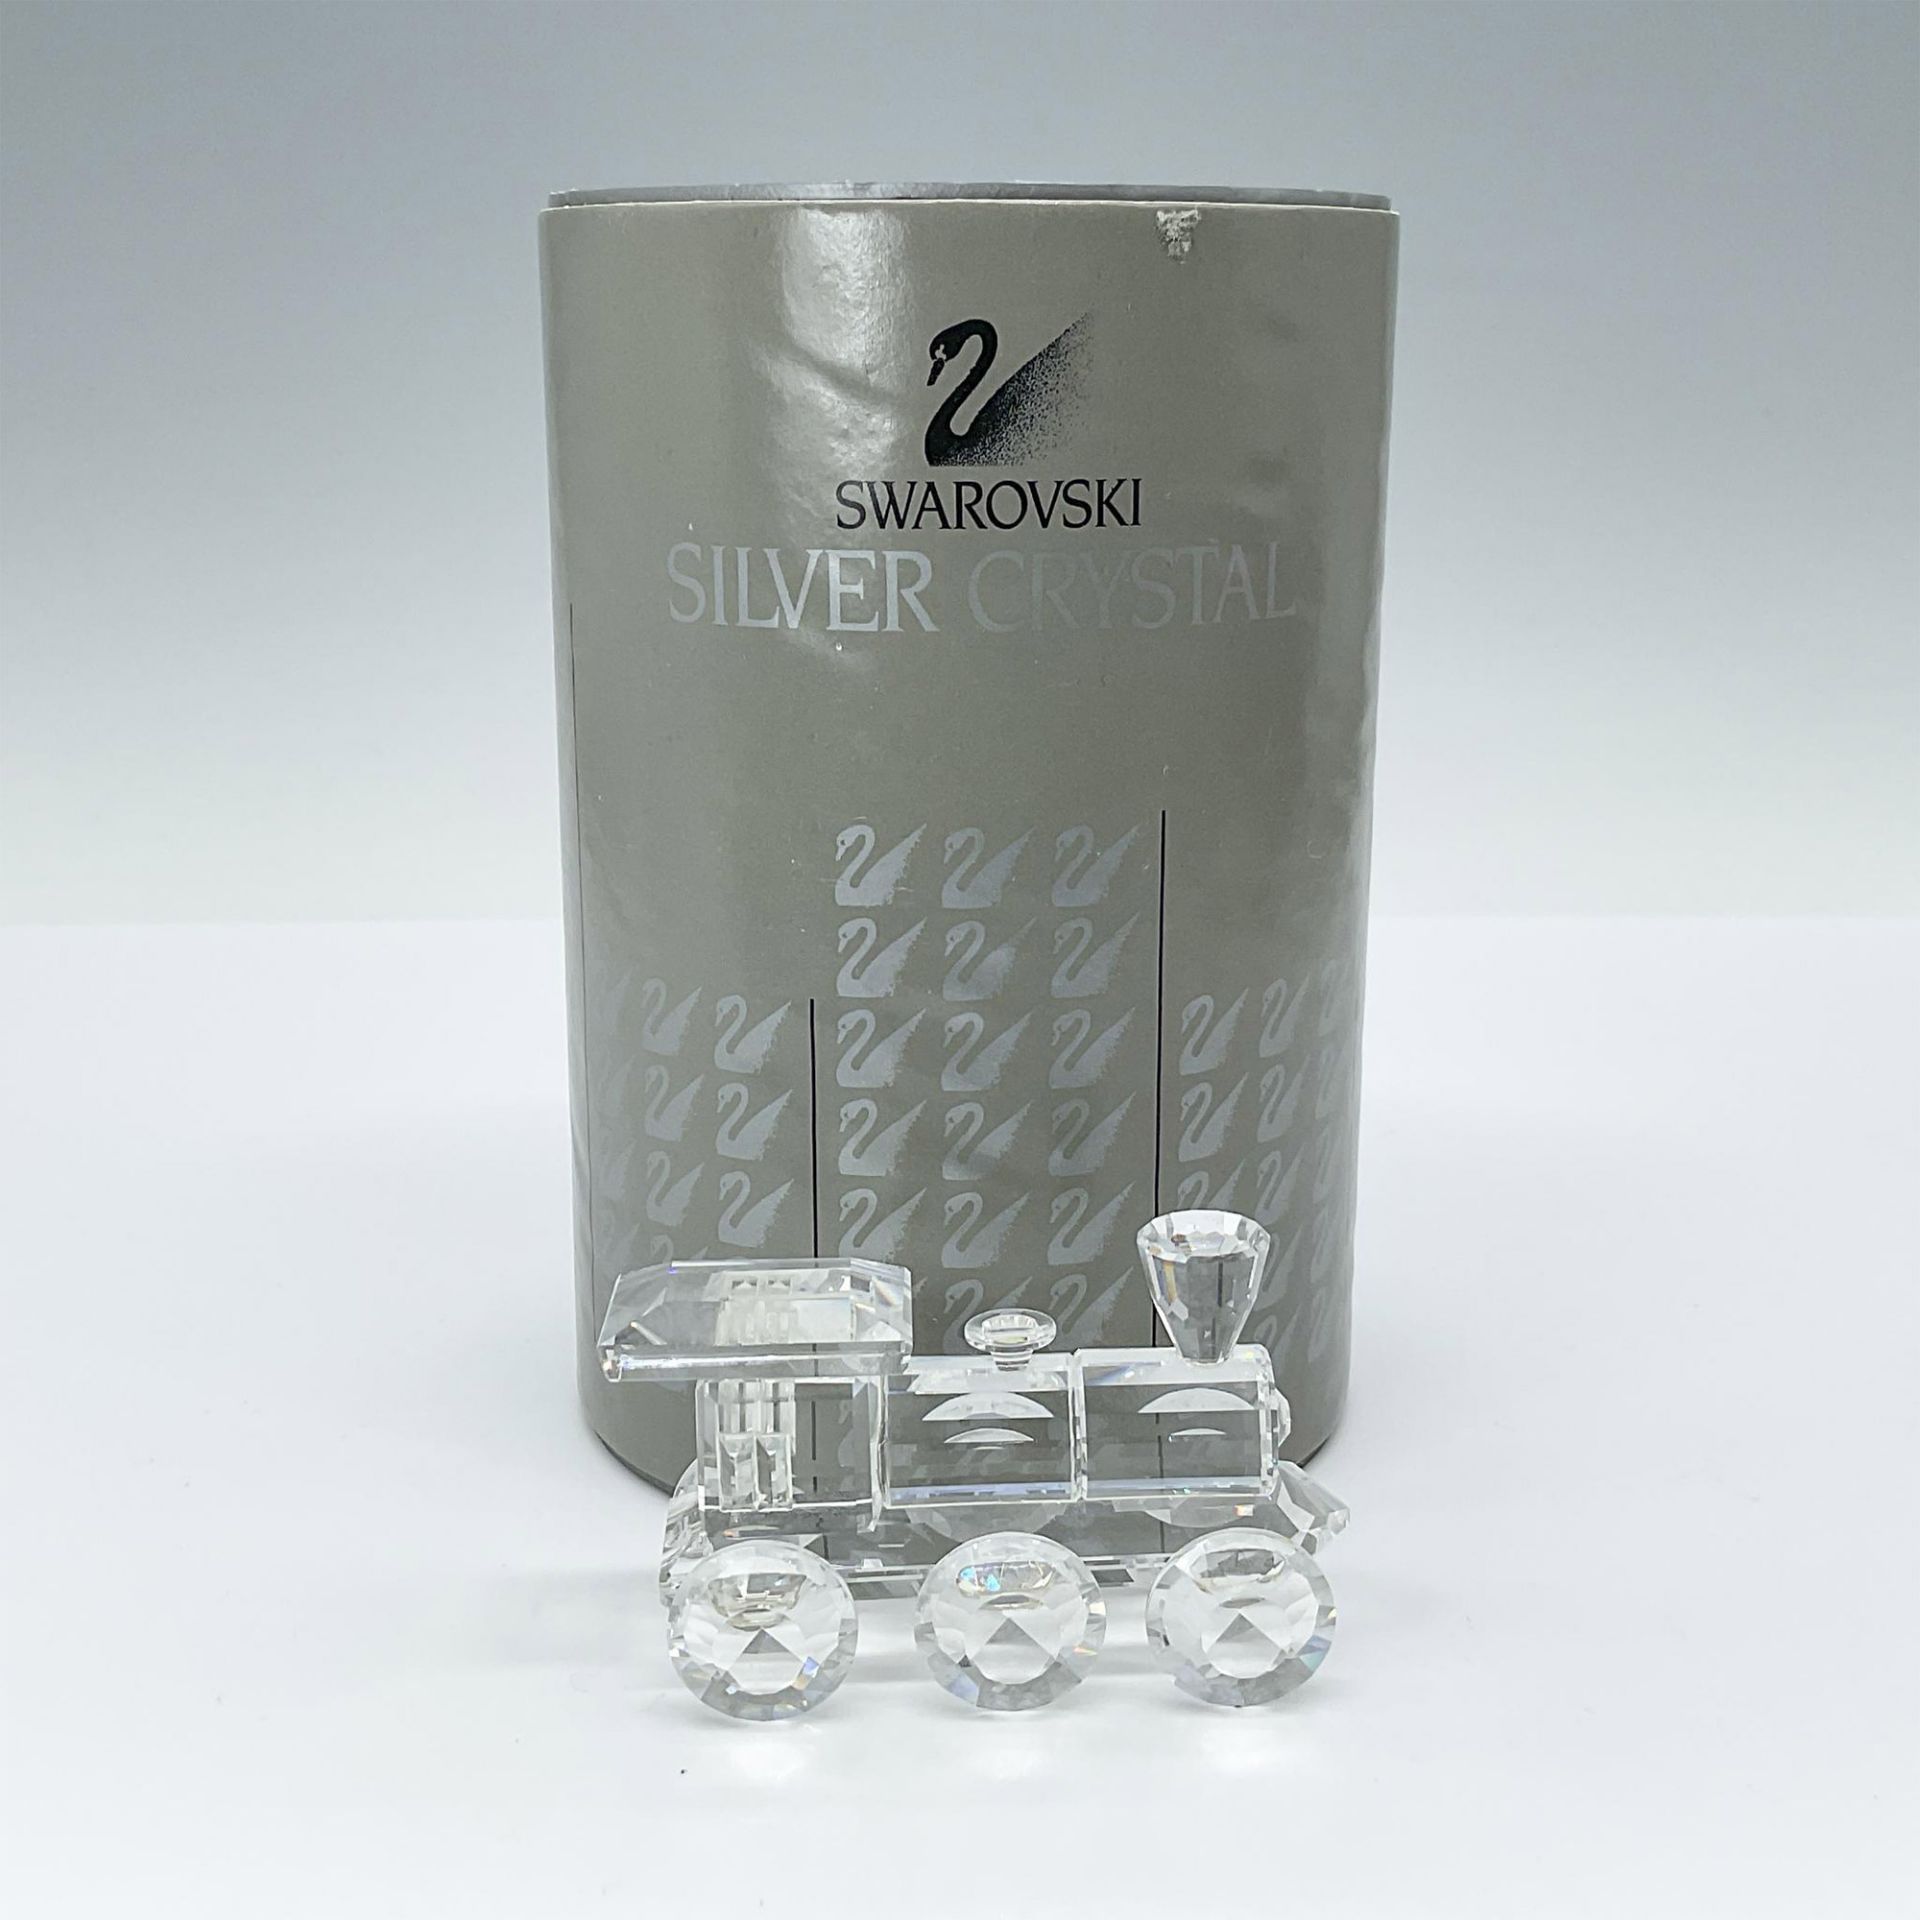 Swarovski Silver Crystal Figurine, Train Locomotive - Image 4 of 4